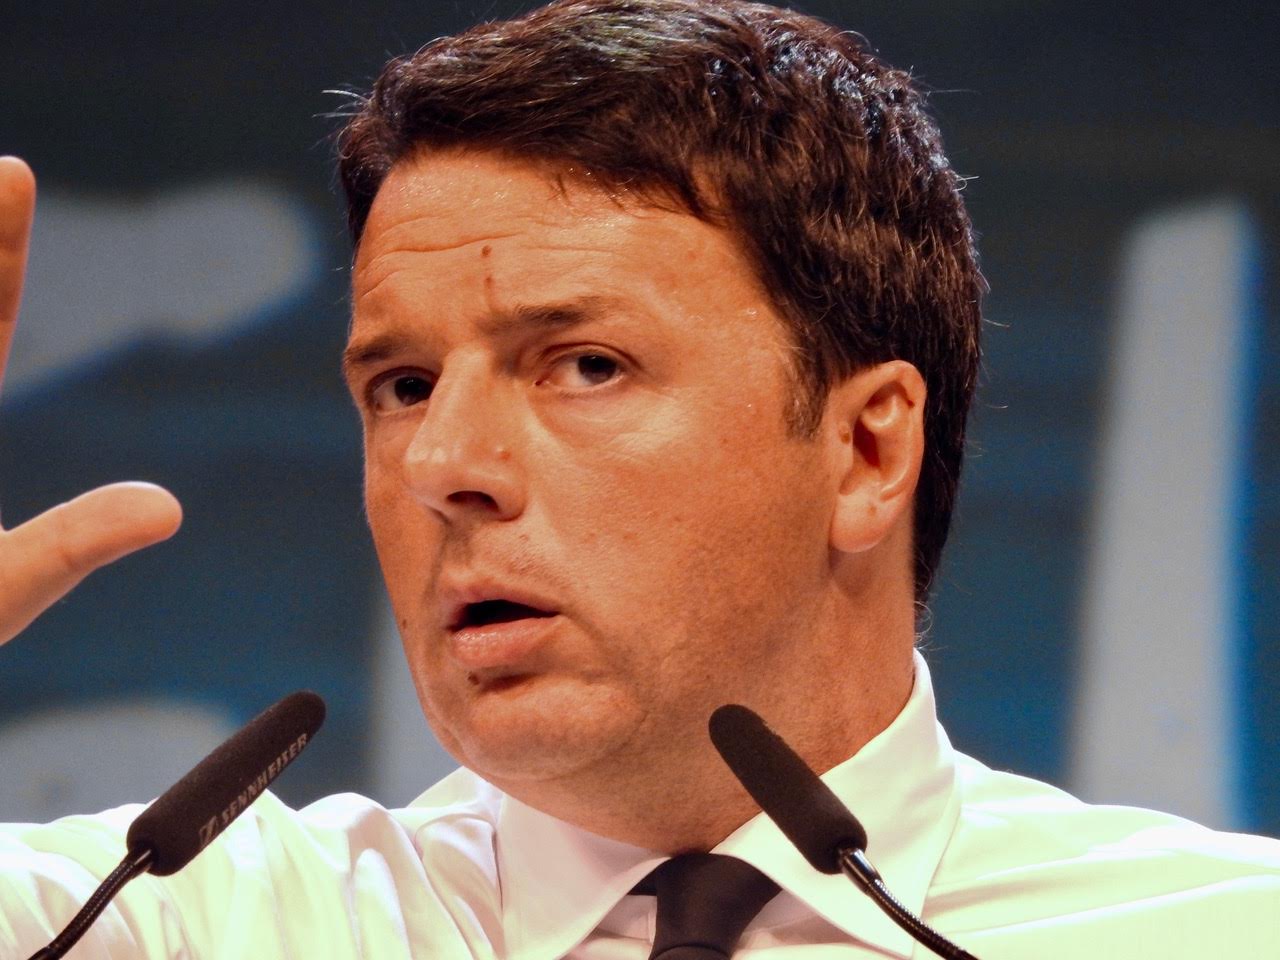 Matteo Renzi proporzionale